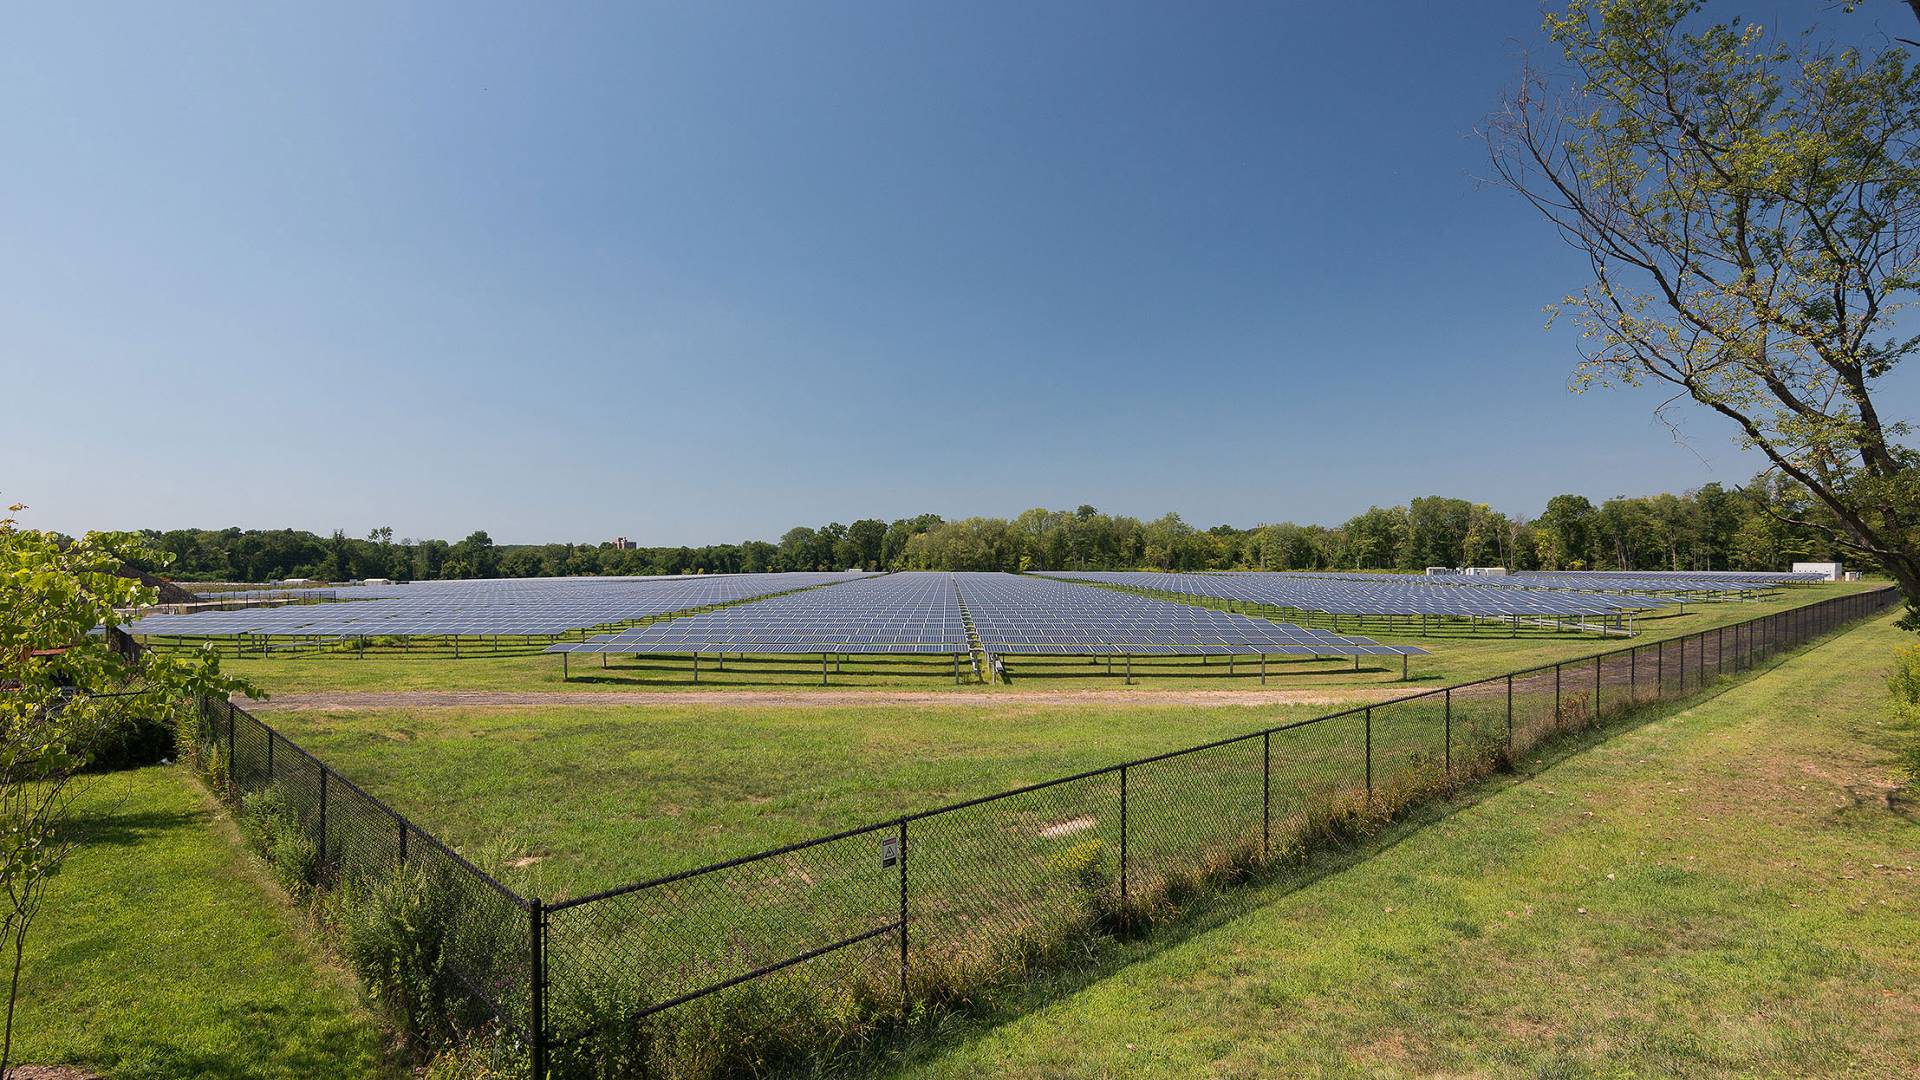 a field full of solar panels